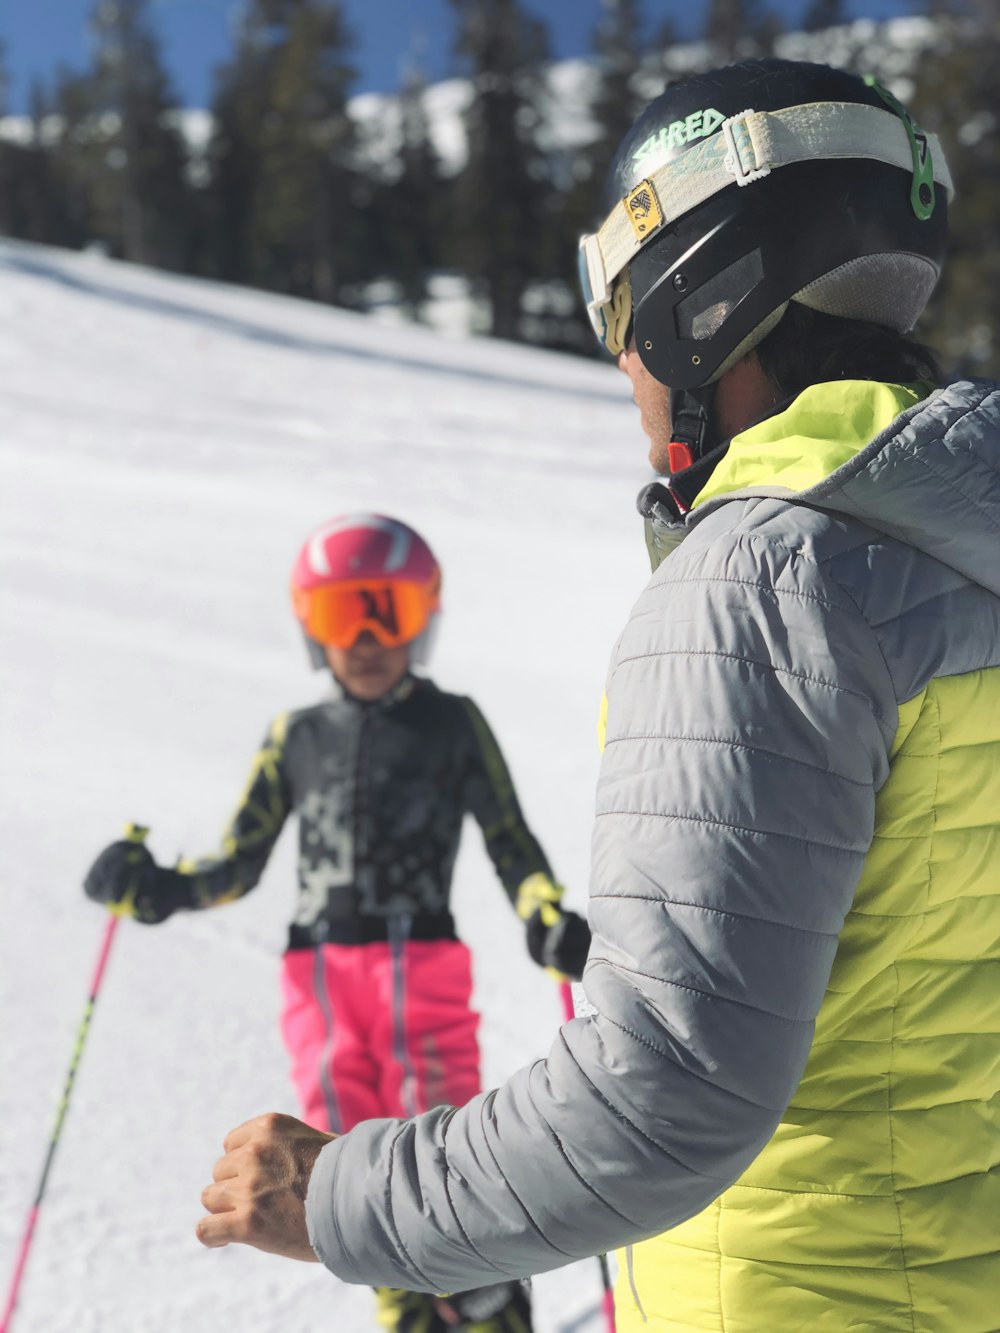 man in black jacket and yellow helmet riding on snow ski